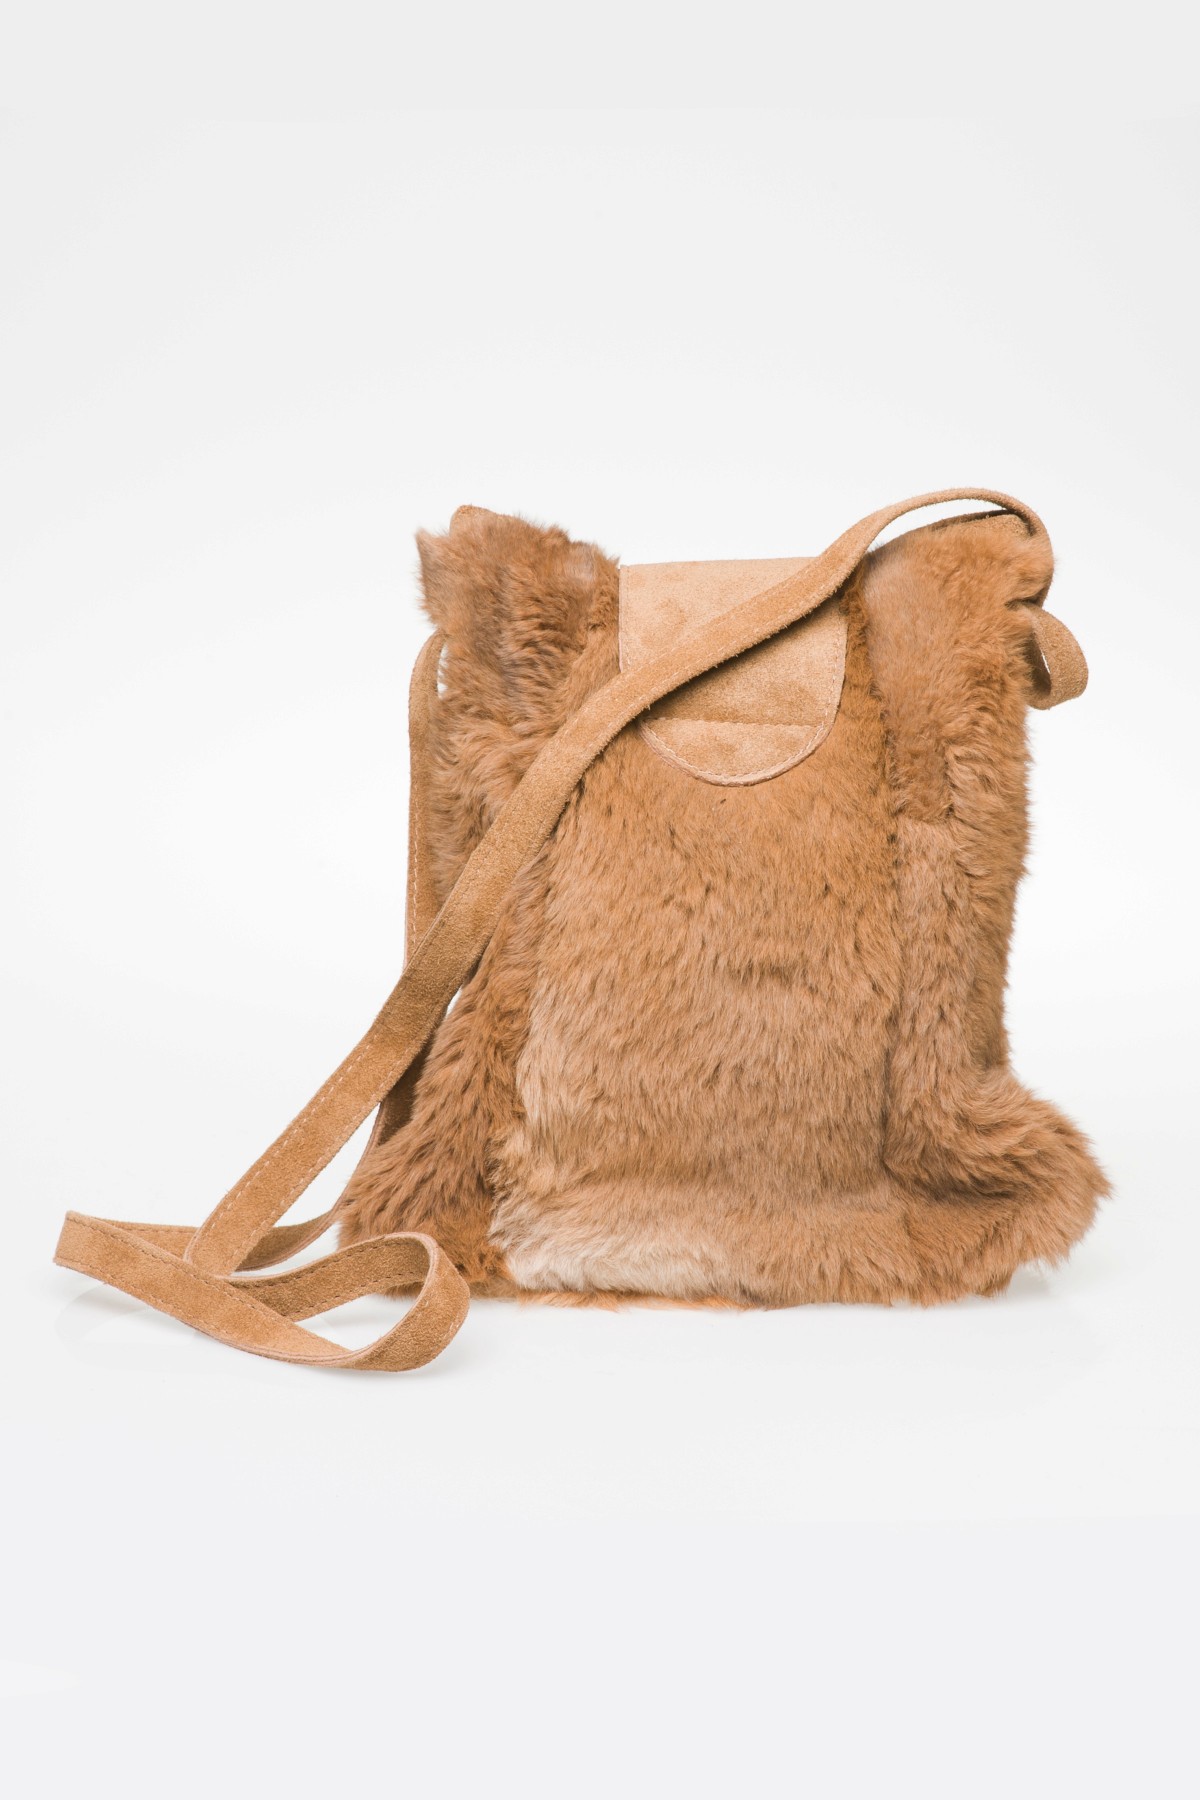 Kangaroo Ugg Bag - Australian Leather - Australian Made Ugg Boots